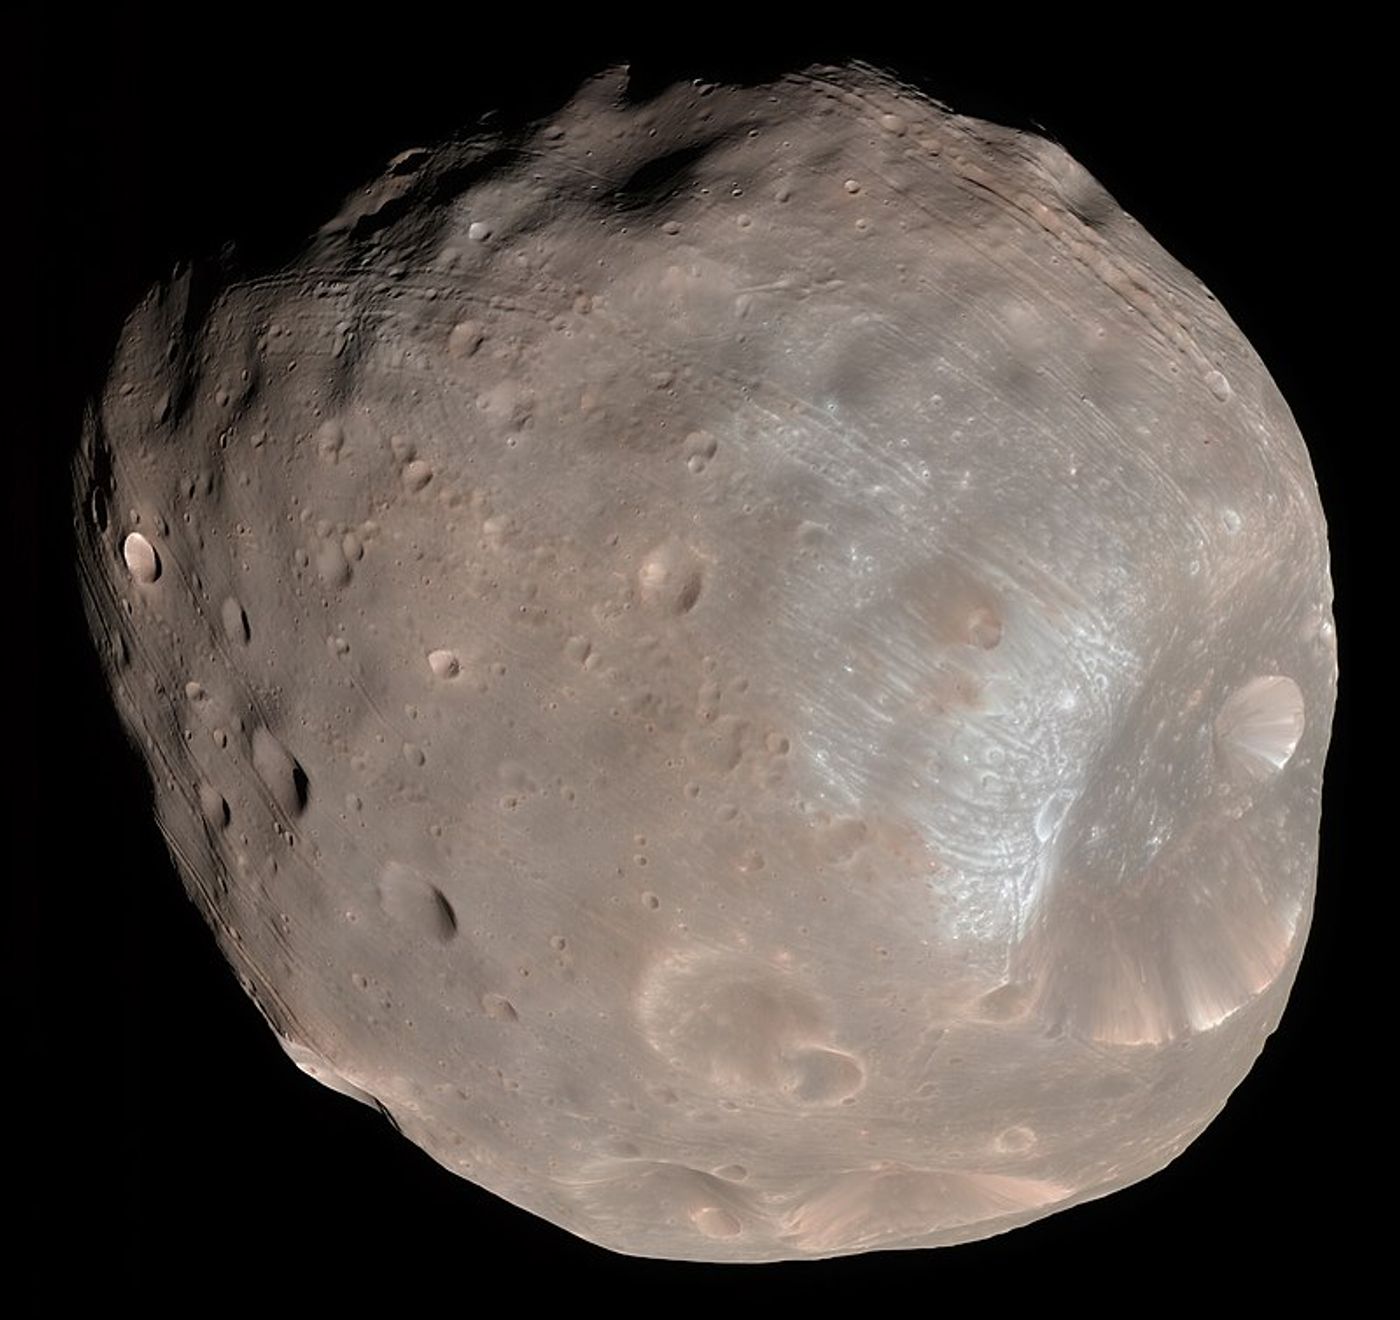 Phobos (Color-enhanced) (Credit: NASA/JPL-Caltech/University of Arizona)